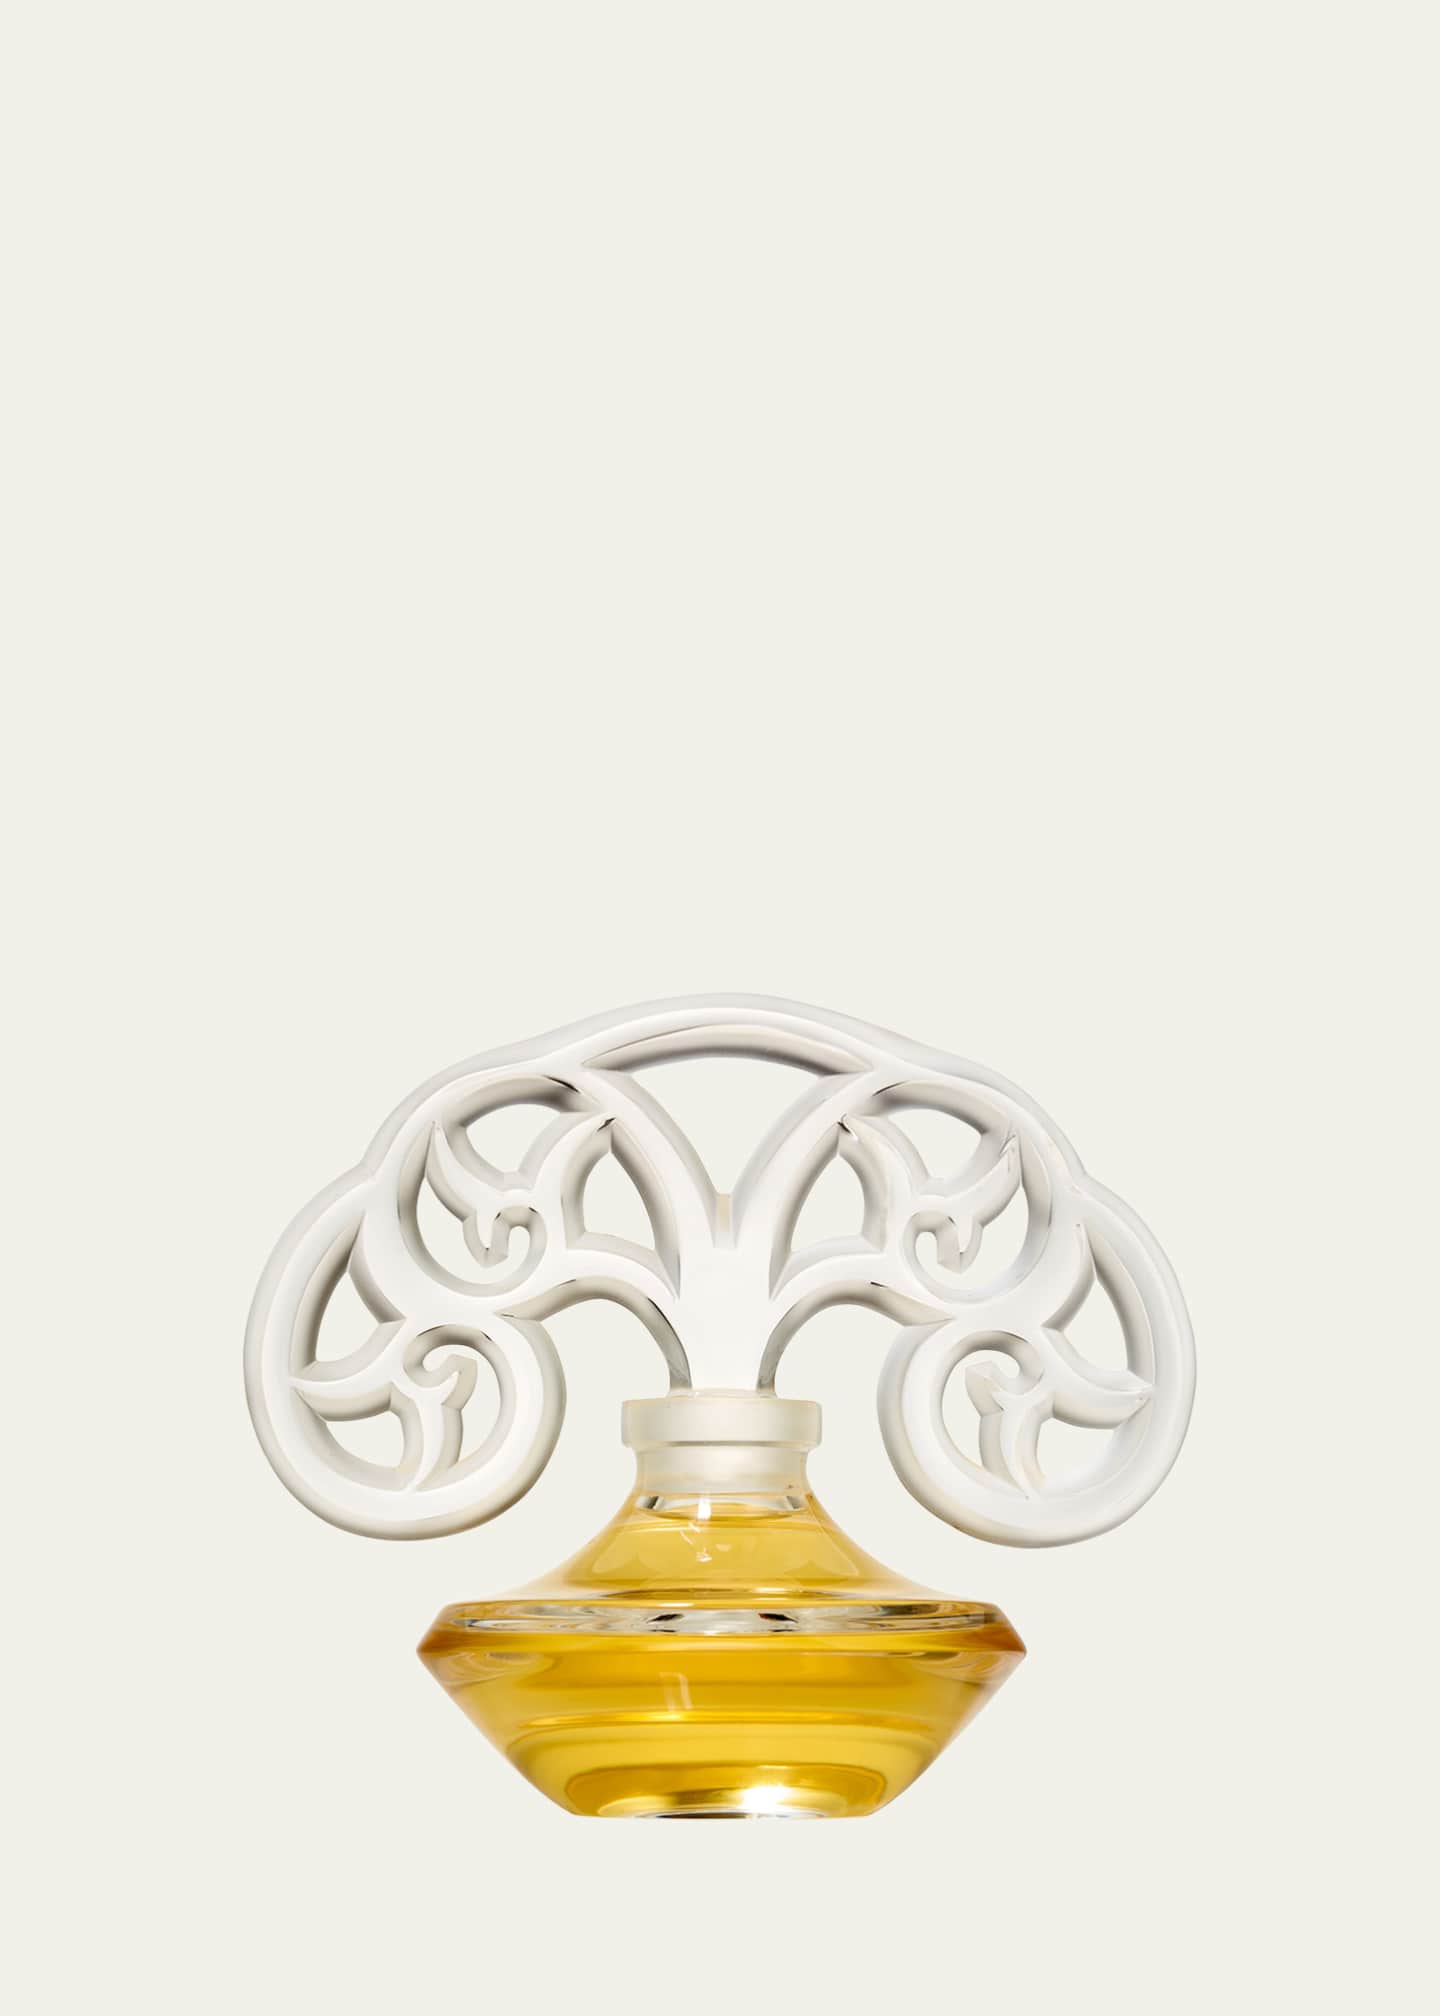 Shalini Parfum Jardin Nocturne Parfum presented in a Lalique Crystal Flacon, 1.7 oz / 50 mL